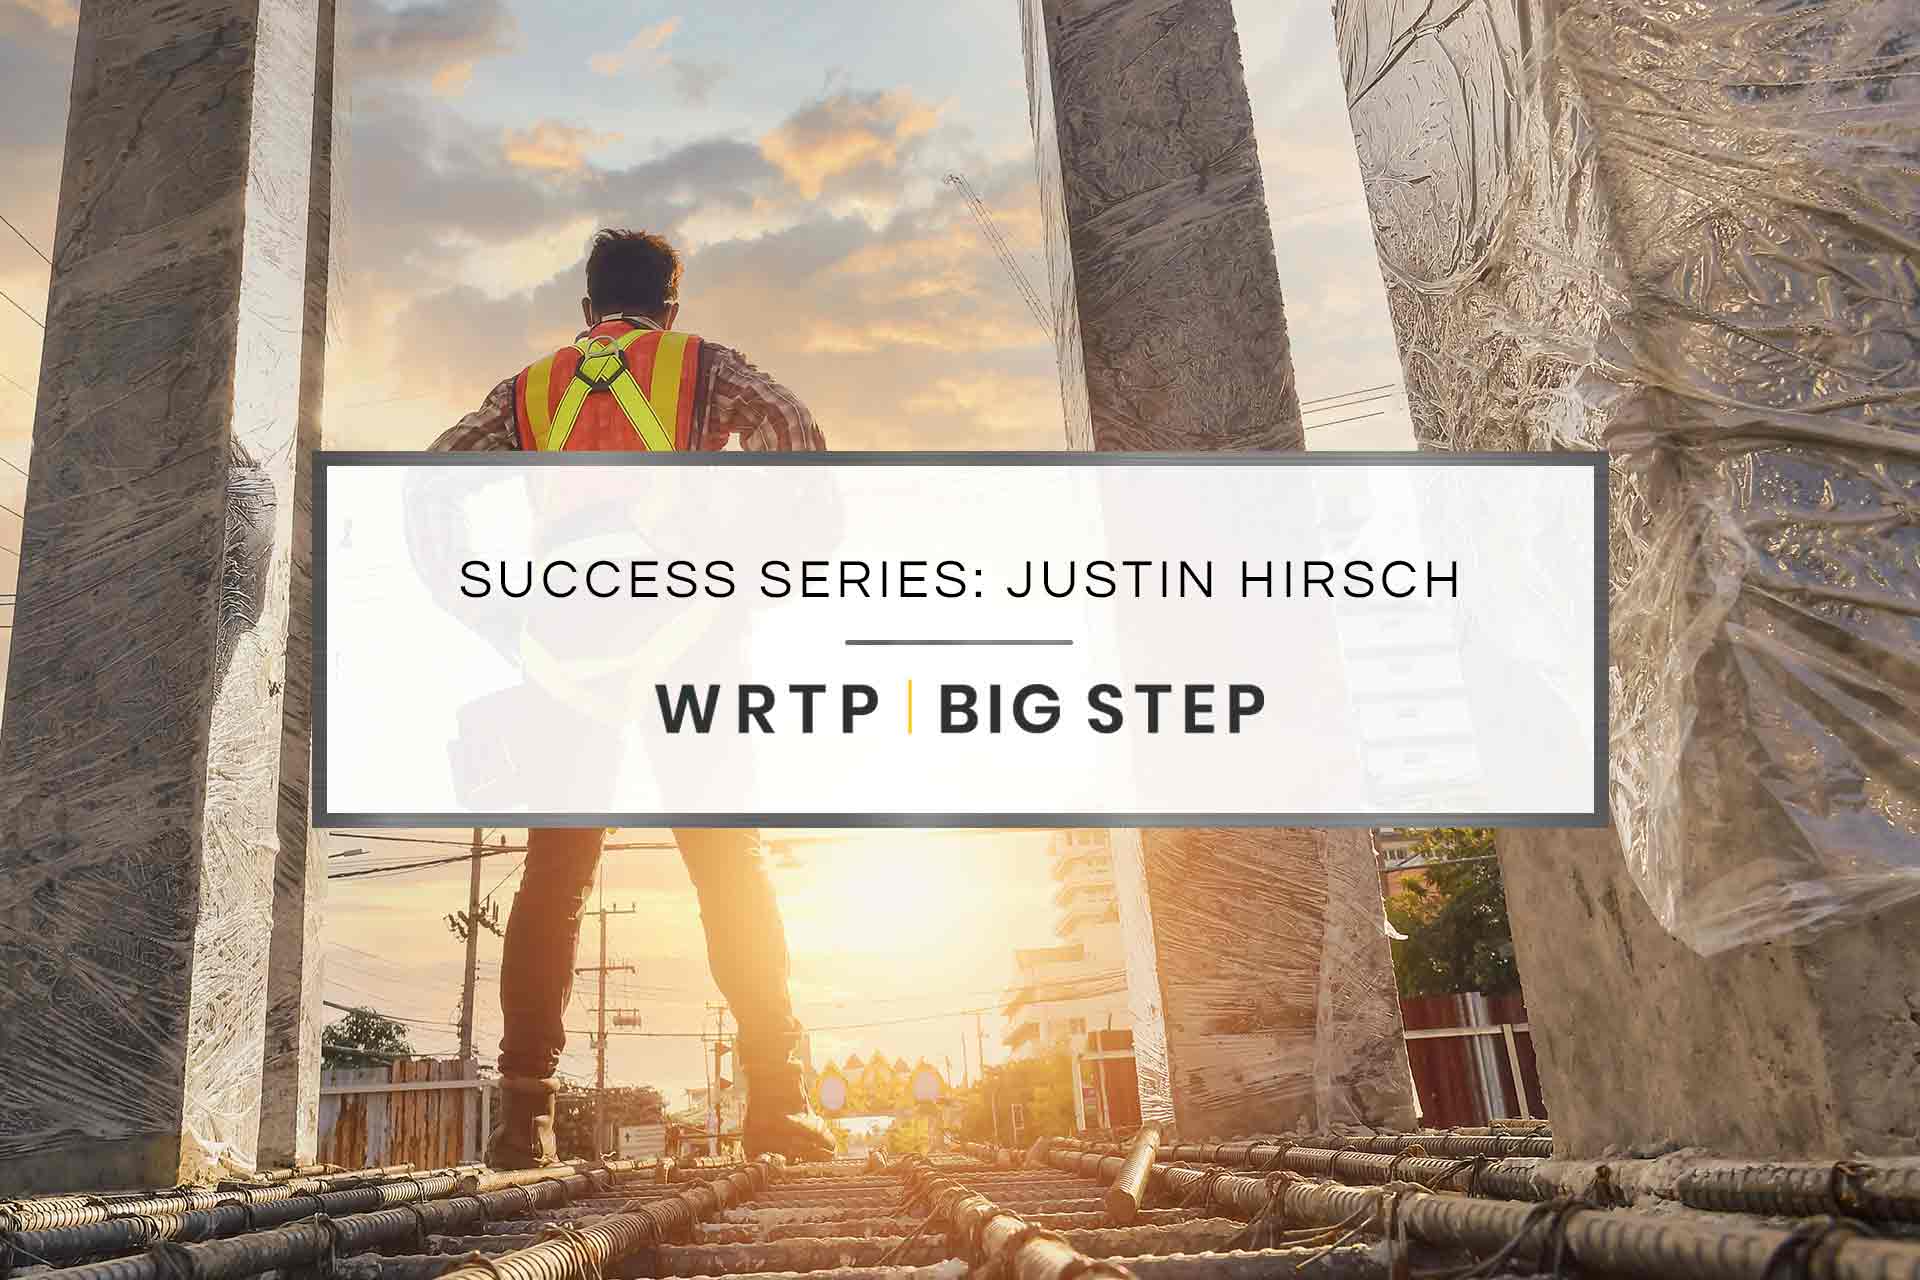 WRTP | BIG STEP Success Series: Justin Hirsch's Success Story